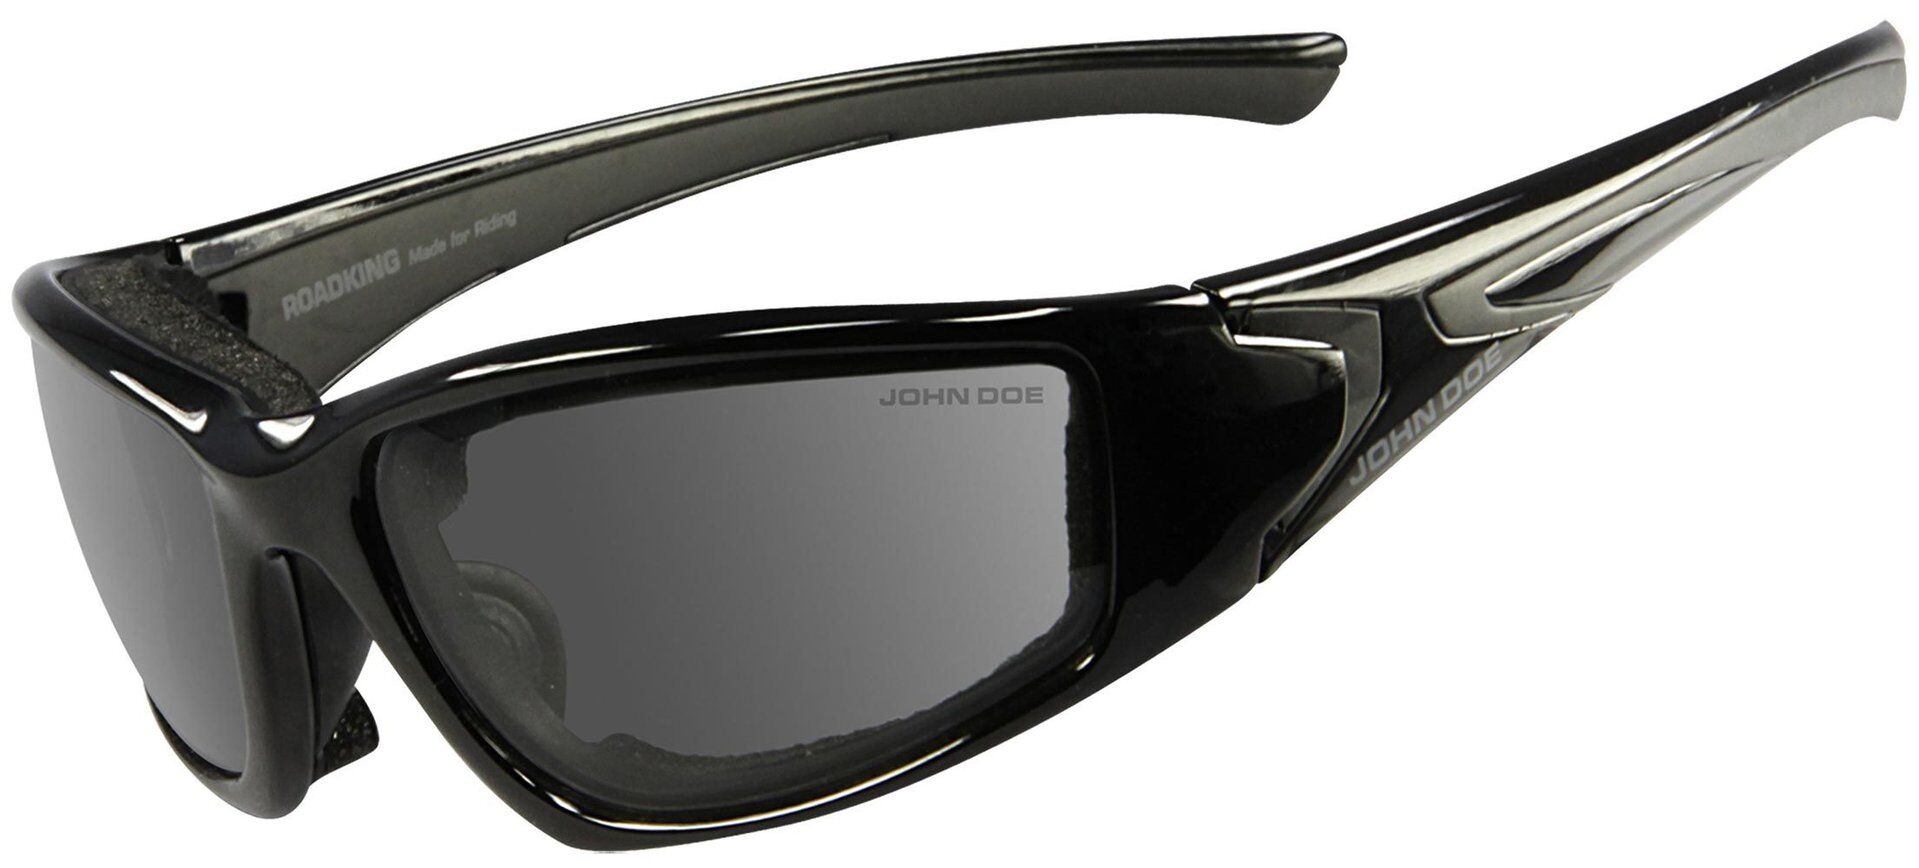 John Doe Roadking Photocromatic Sunglasses  - Black